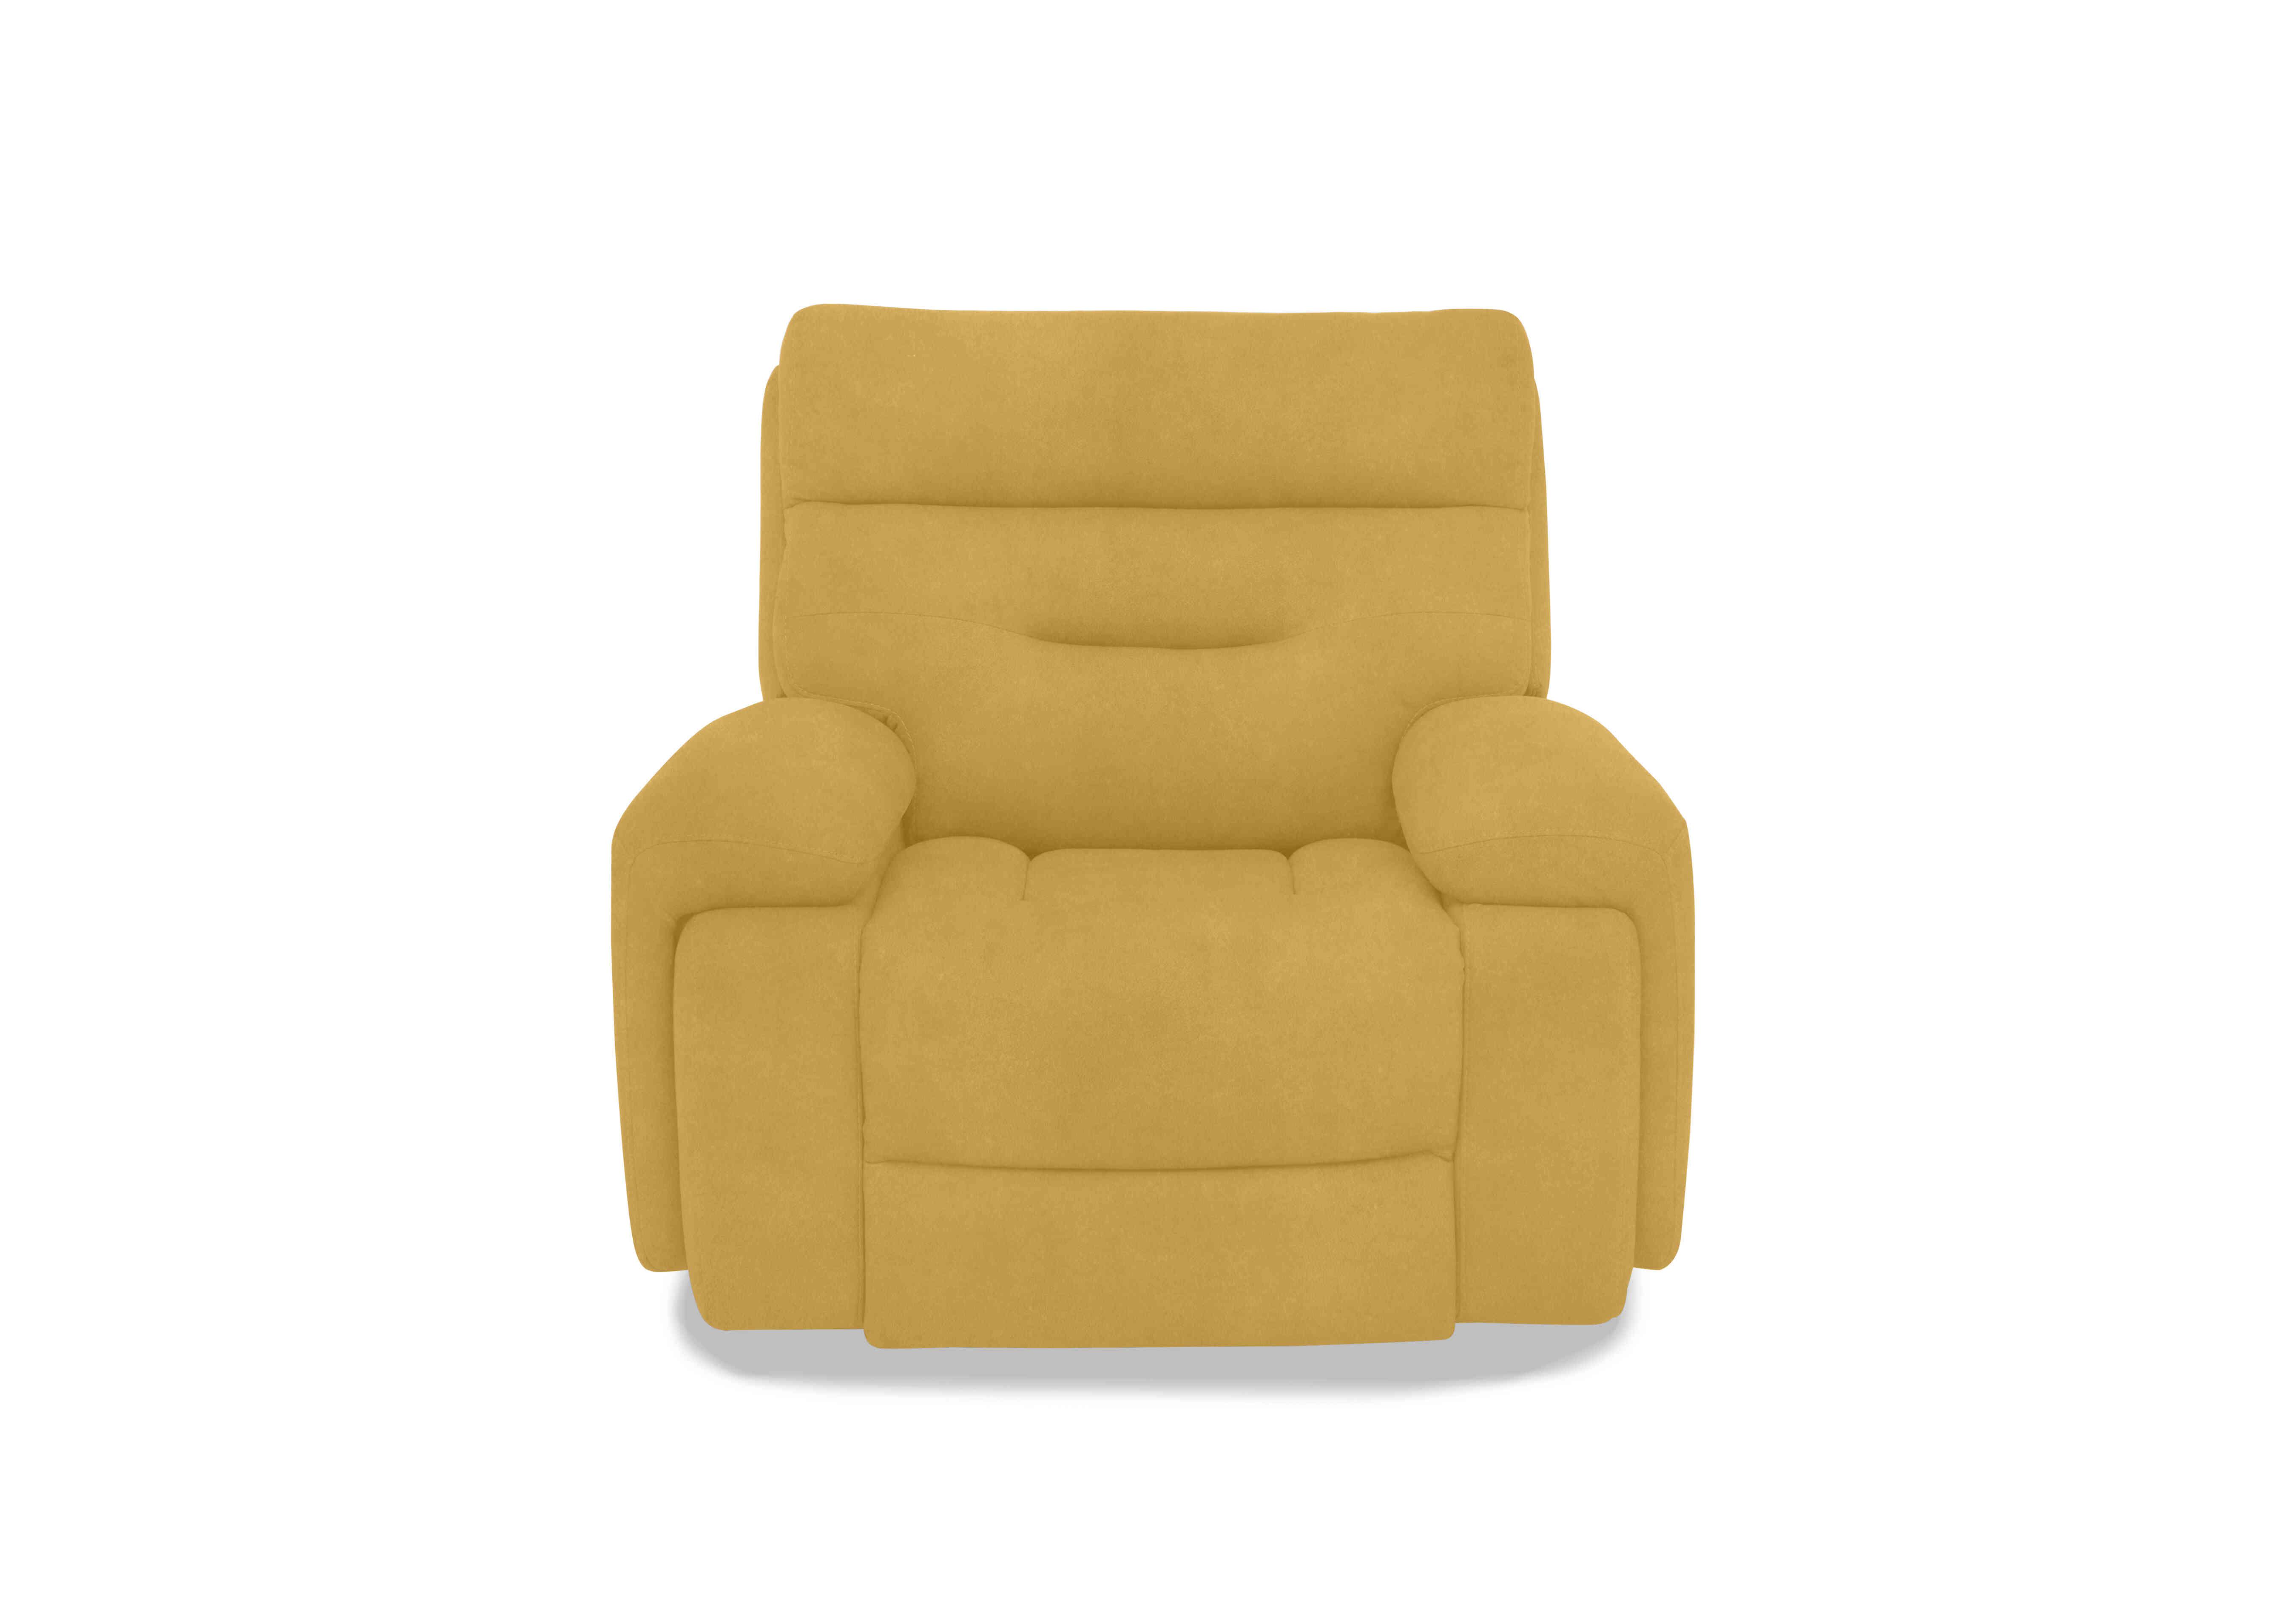 Cinemax Media Fabric Power Recliner Chair with Power Headrest in Vv-0310 Velvet Giallo on Furniture Village